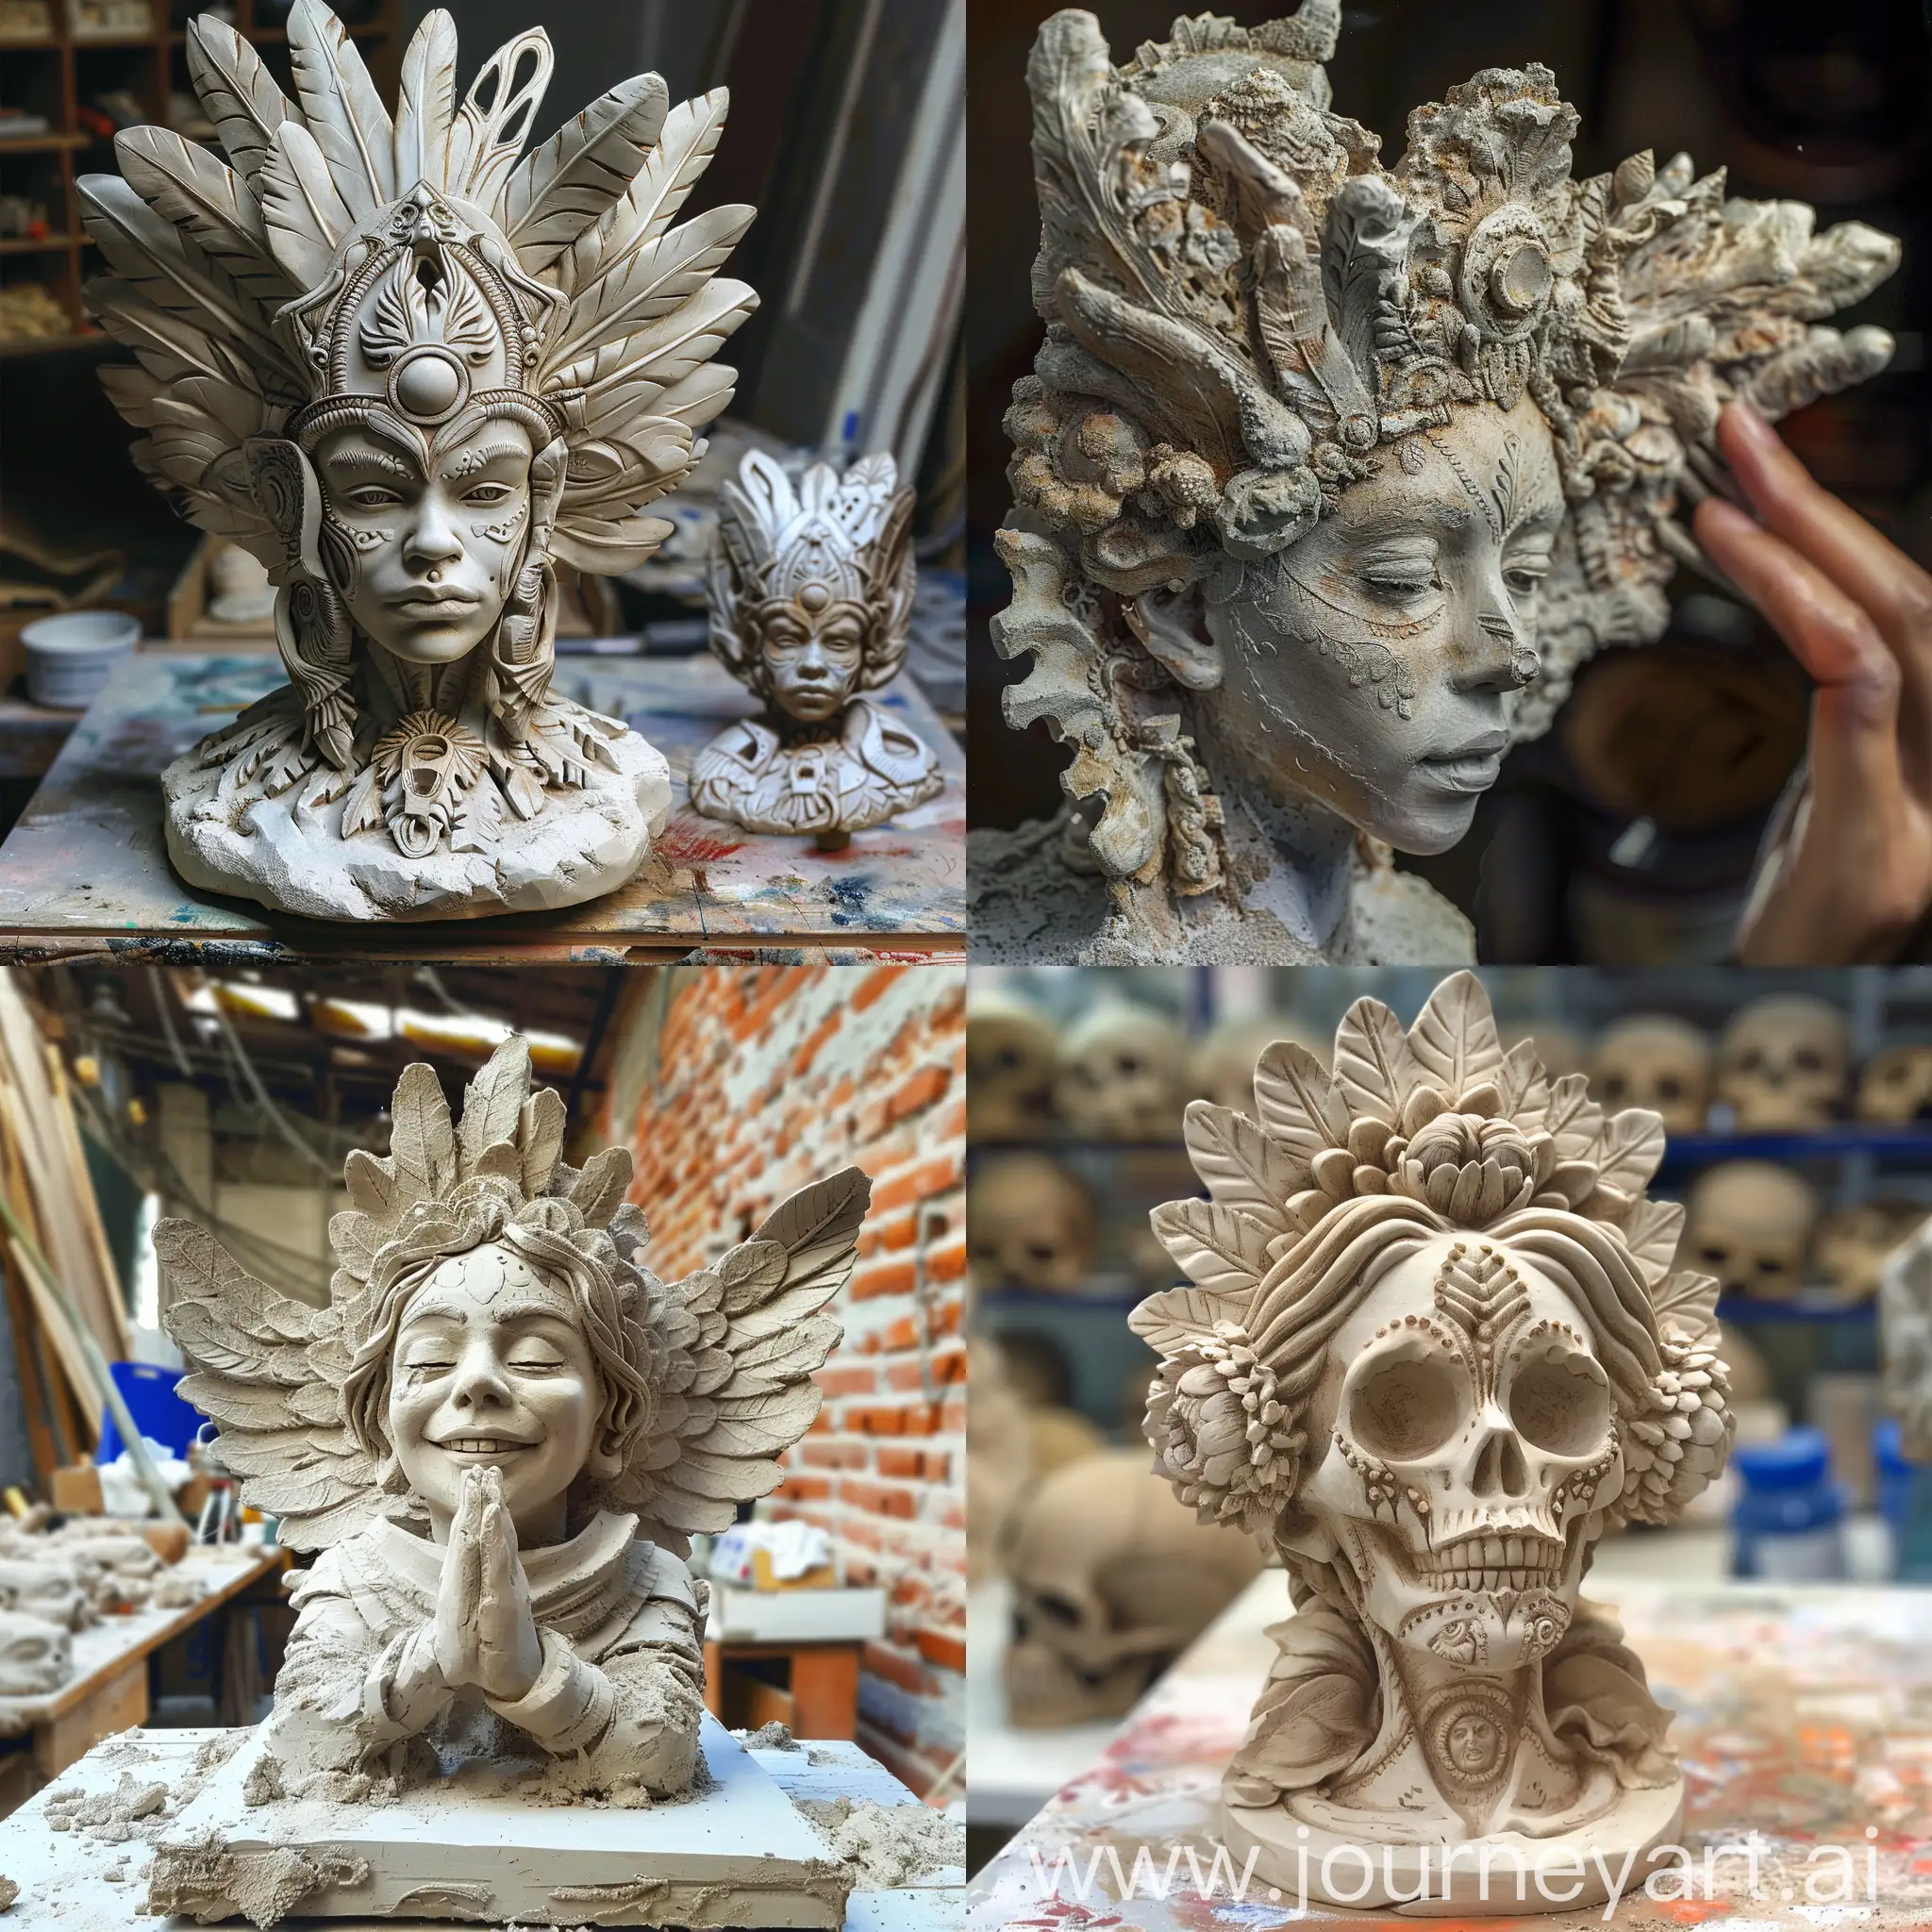 Sculpting-the-Anima-de-Sayula-StepbyStep-Guide-to-Creating-a-Mystical-Sculpture